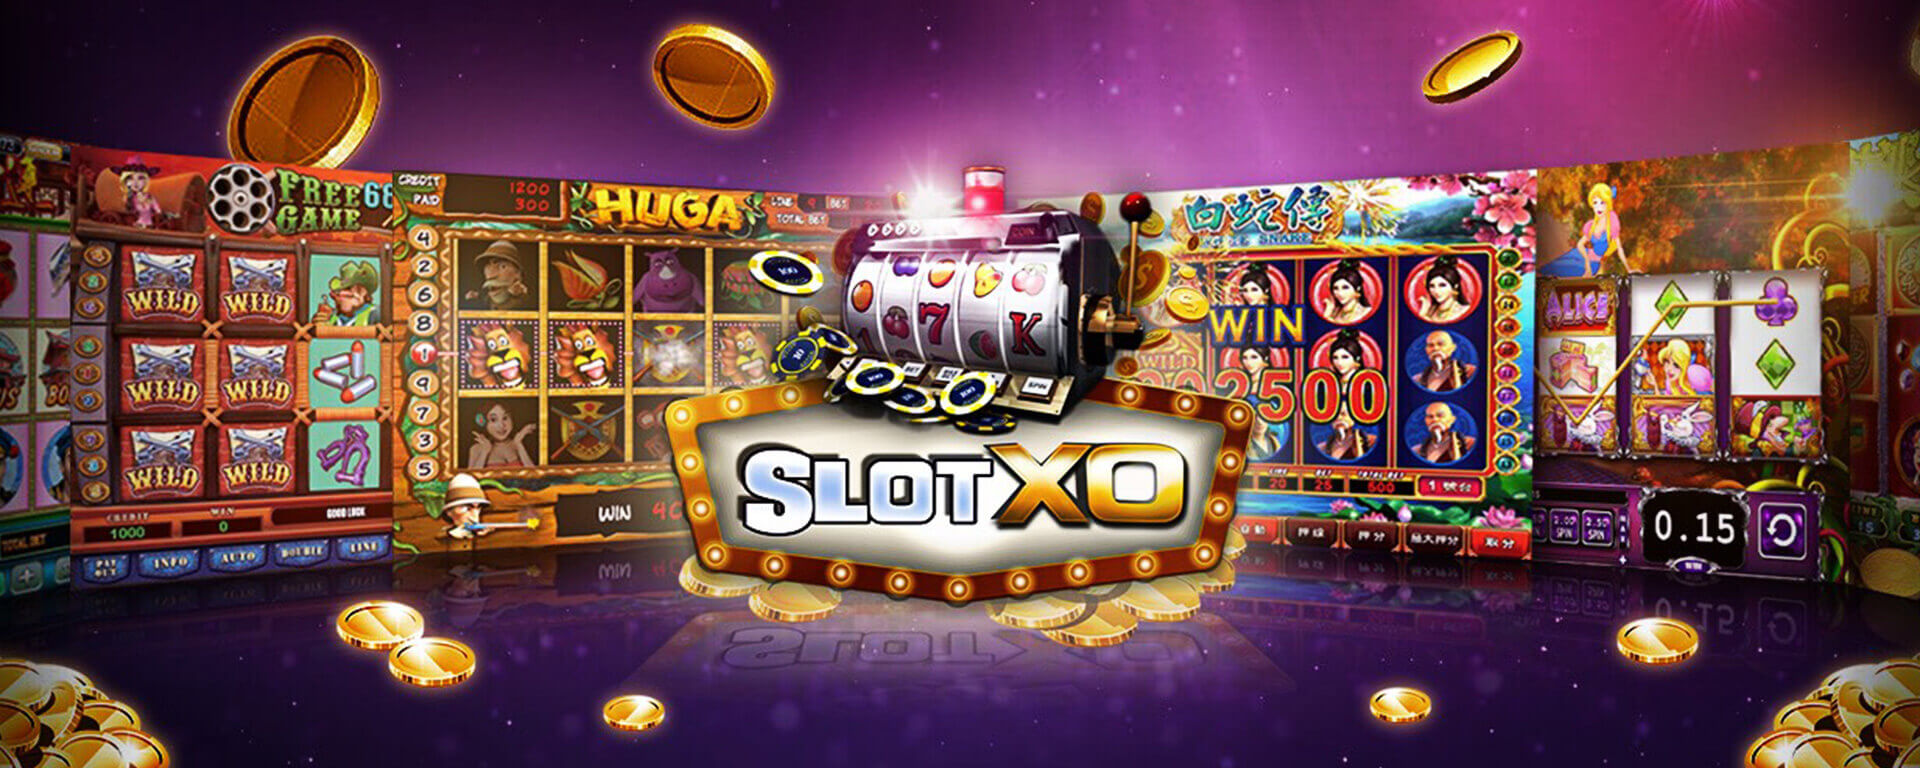 Slotxo Game ทางเข้า เกมสล็อต โบนัส 100% | Slotxo สมัครสมาชิก